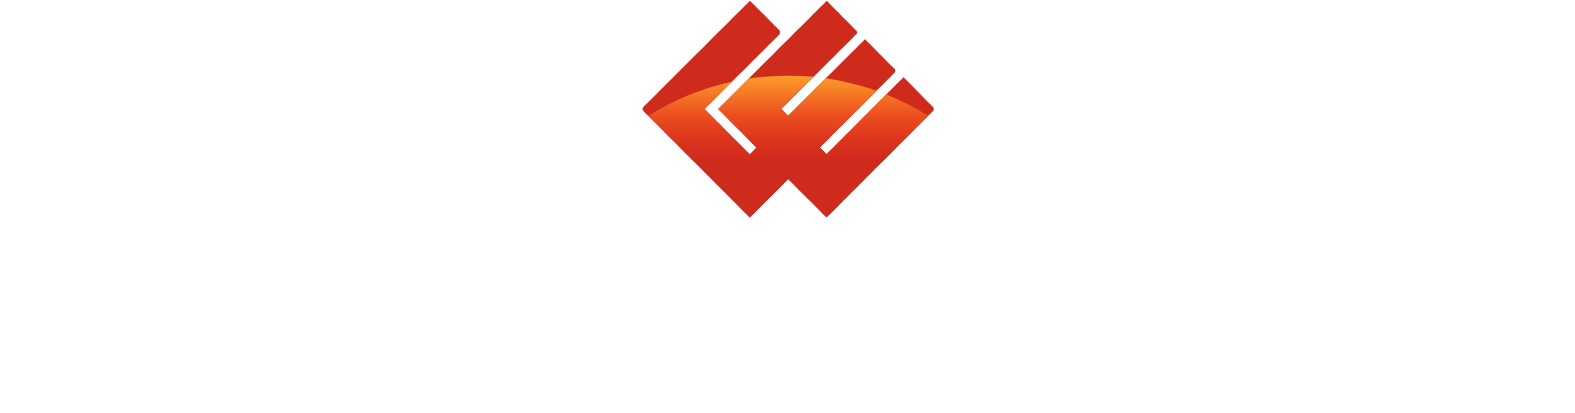 China Longyuan Power Group logo large for dark backgrounds (transparent PNG)